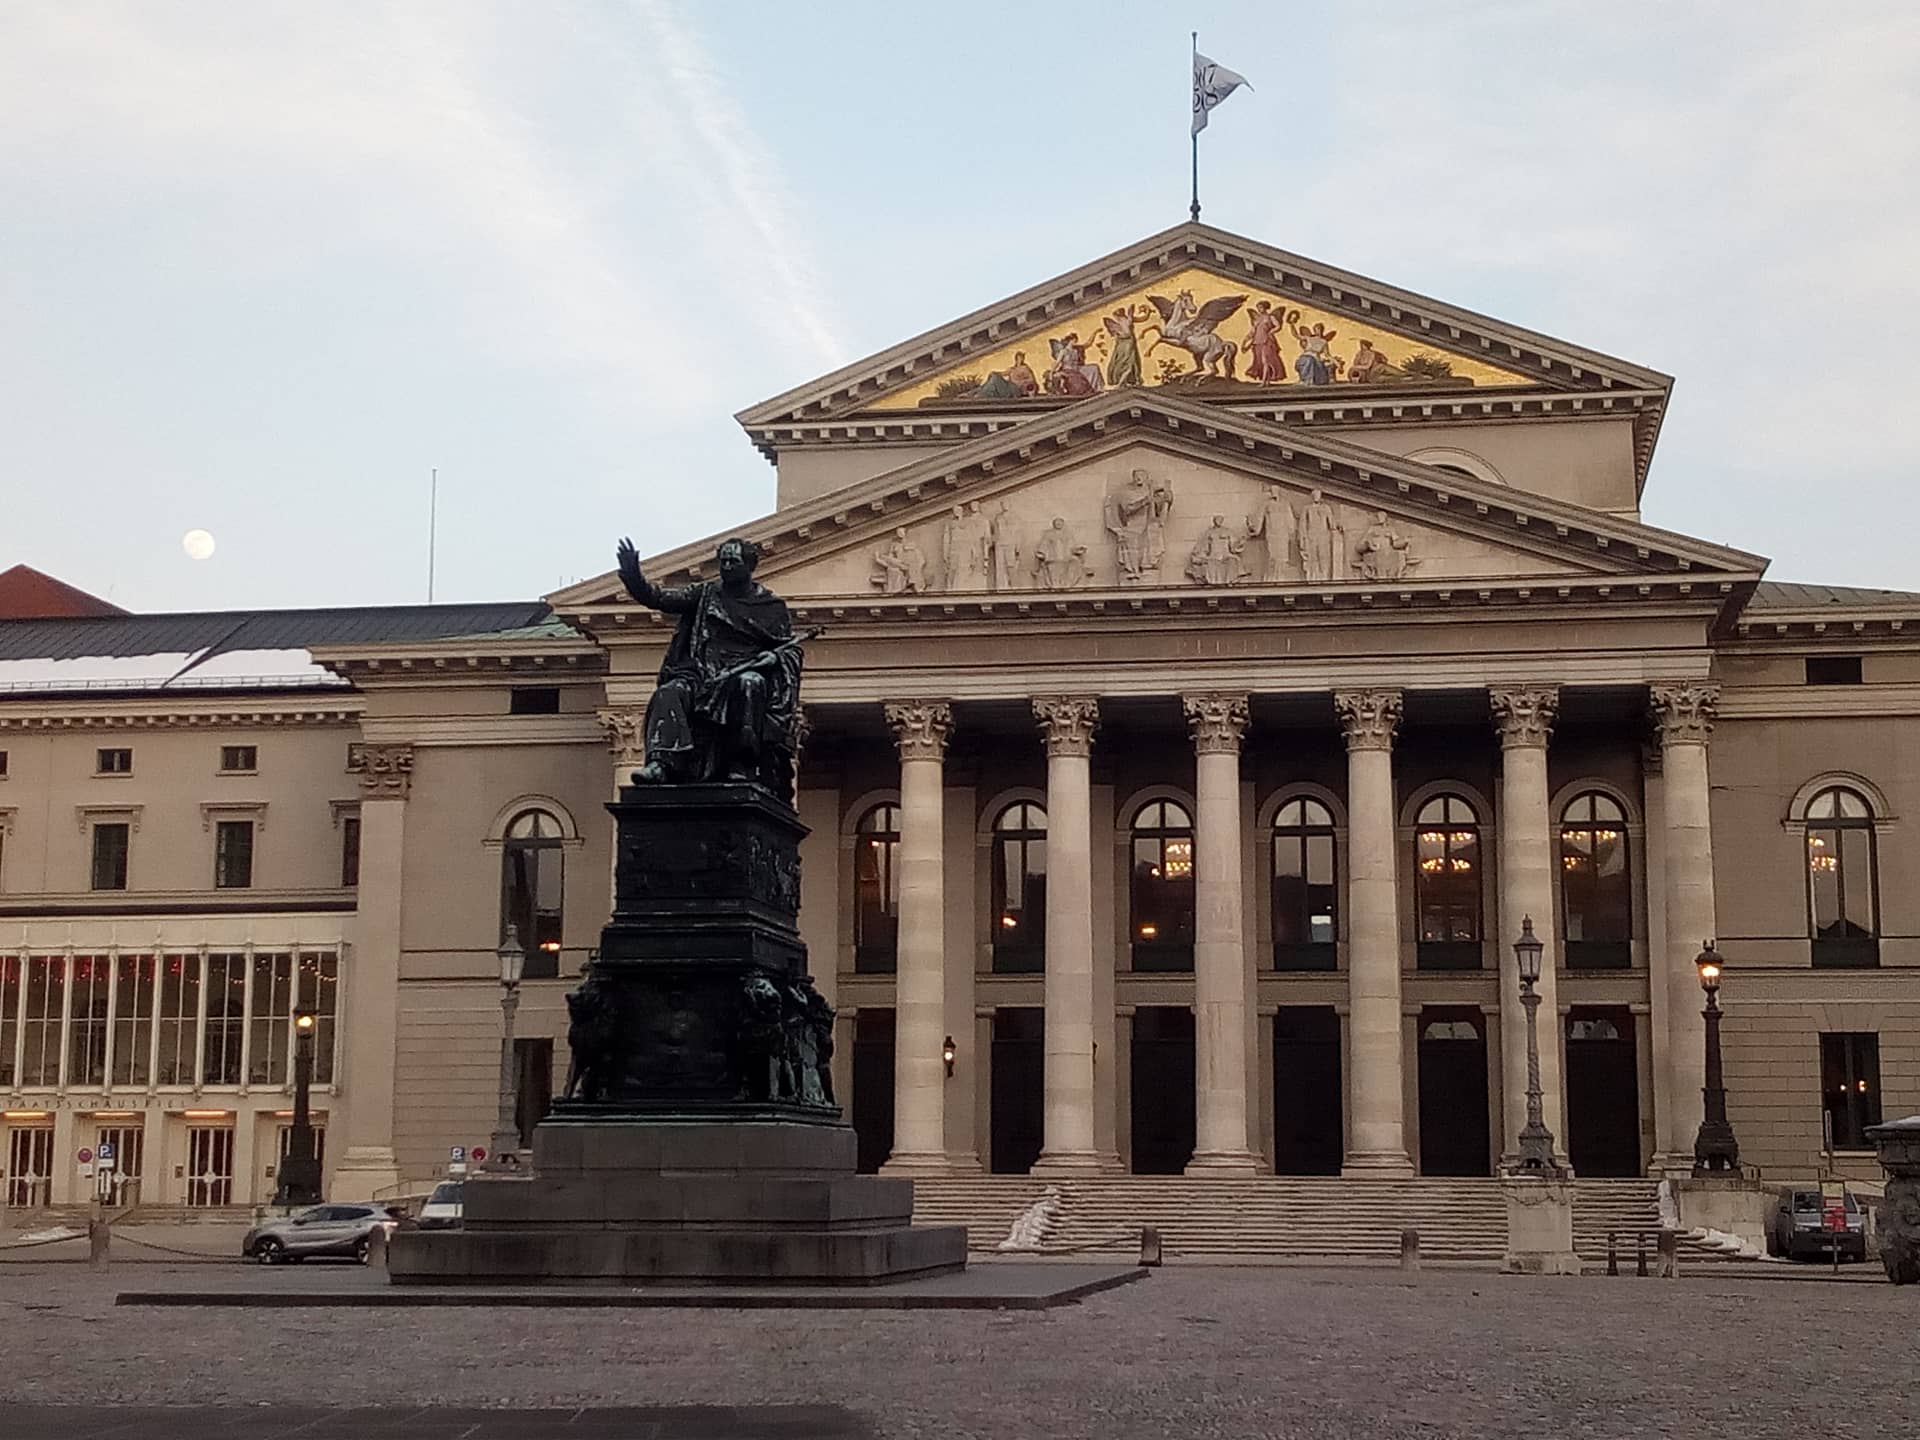 Oper mit Max Joseph | Munich Experience by Franz Schega